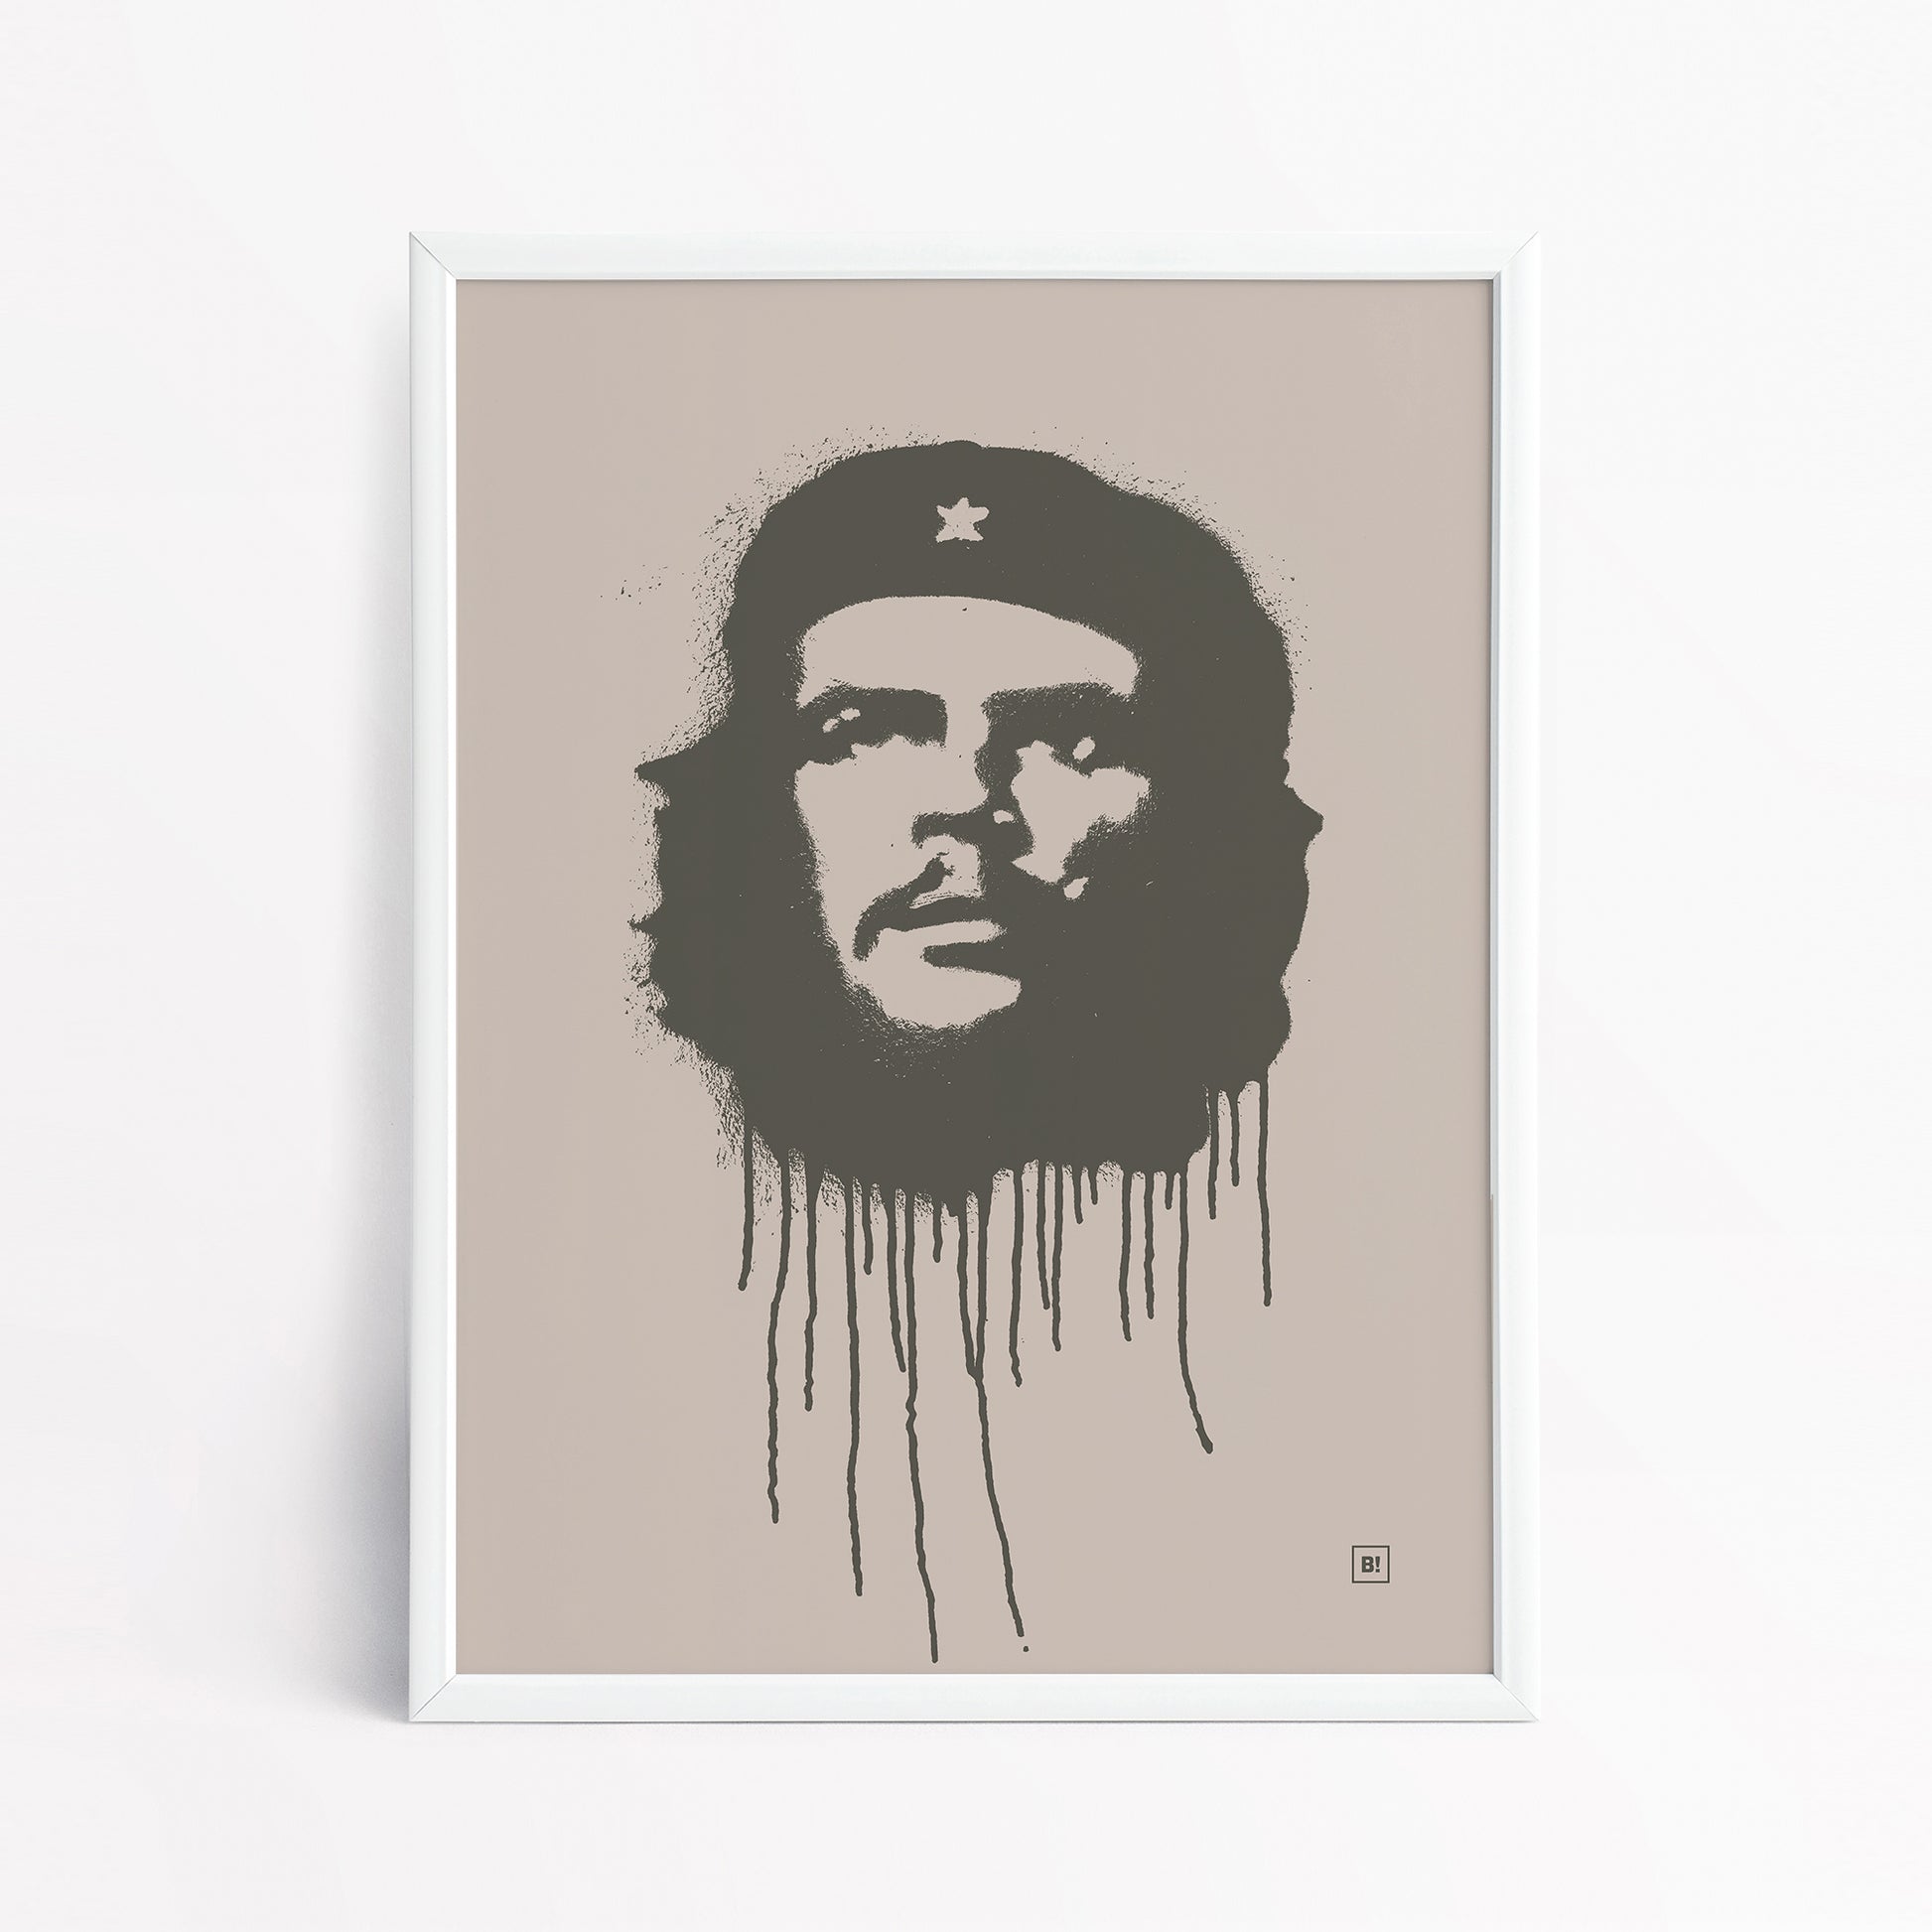 Ernesto Che Guevara hand-drawn illustration vector image, Ernesto